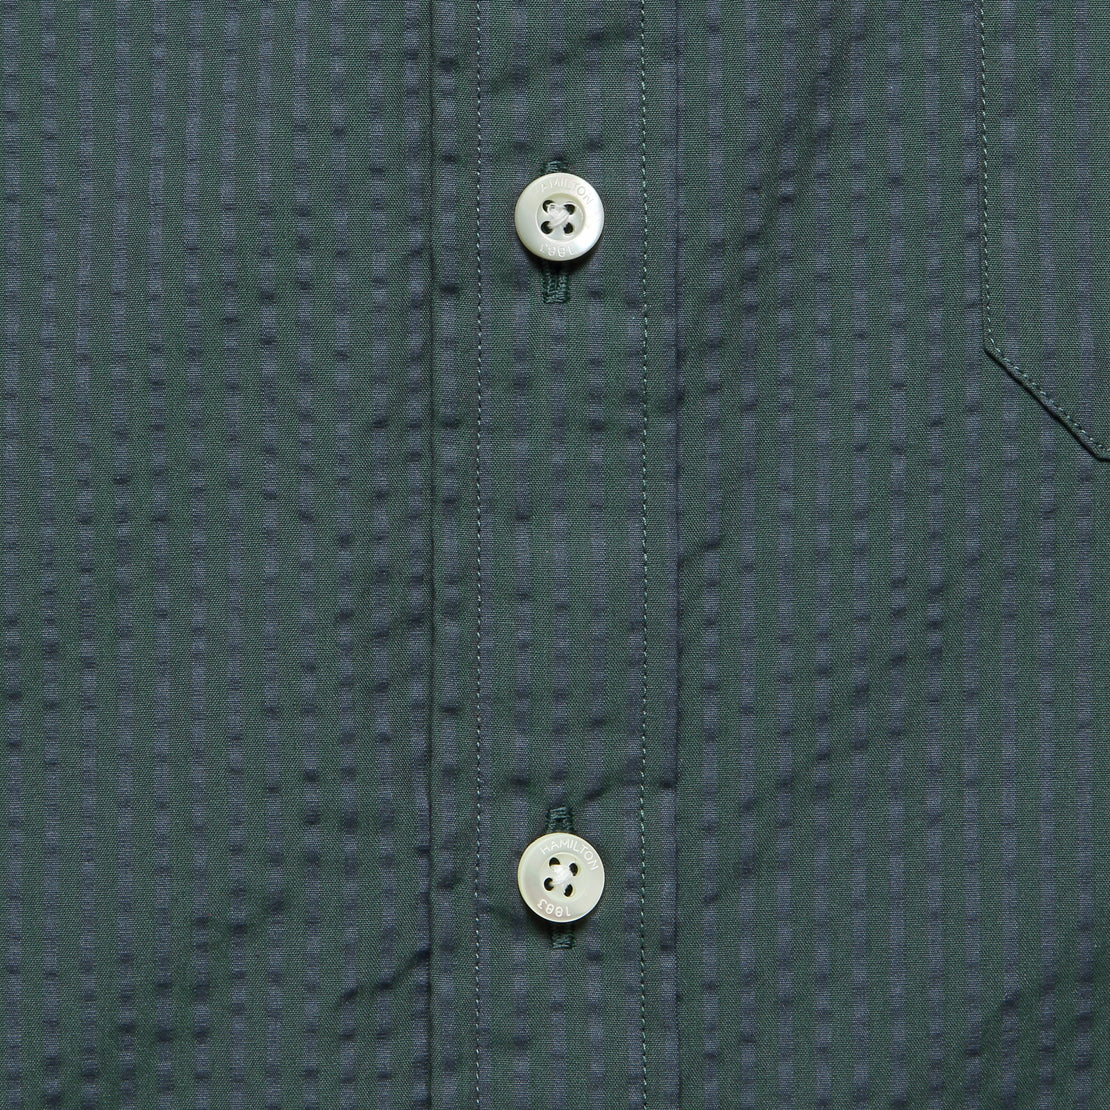 Striped Seersucker Shirt - Green/Grey - Hamilton Shirt Co. - STAG Provisions - Tops - S/S Woven - Seersucker